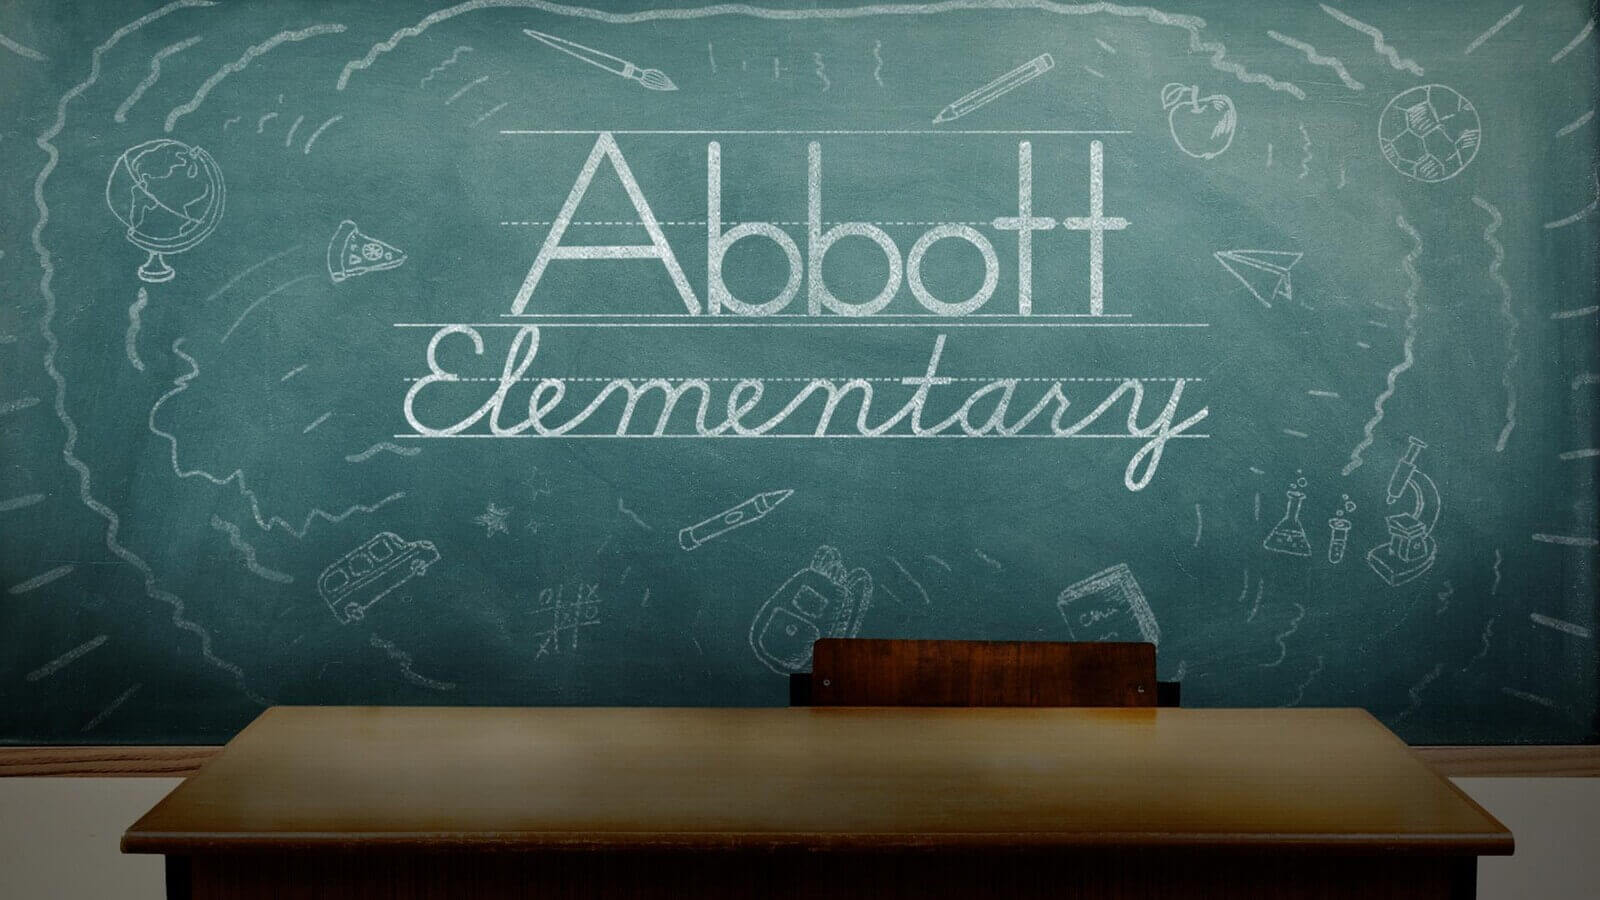 Abbot Elementary